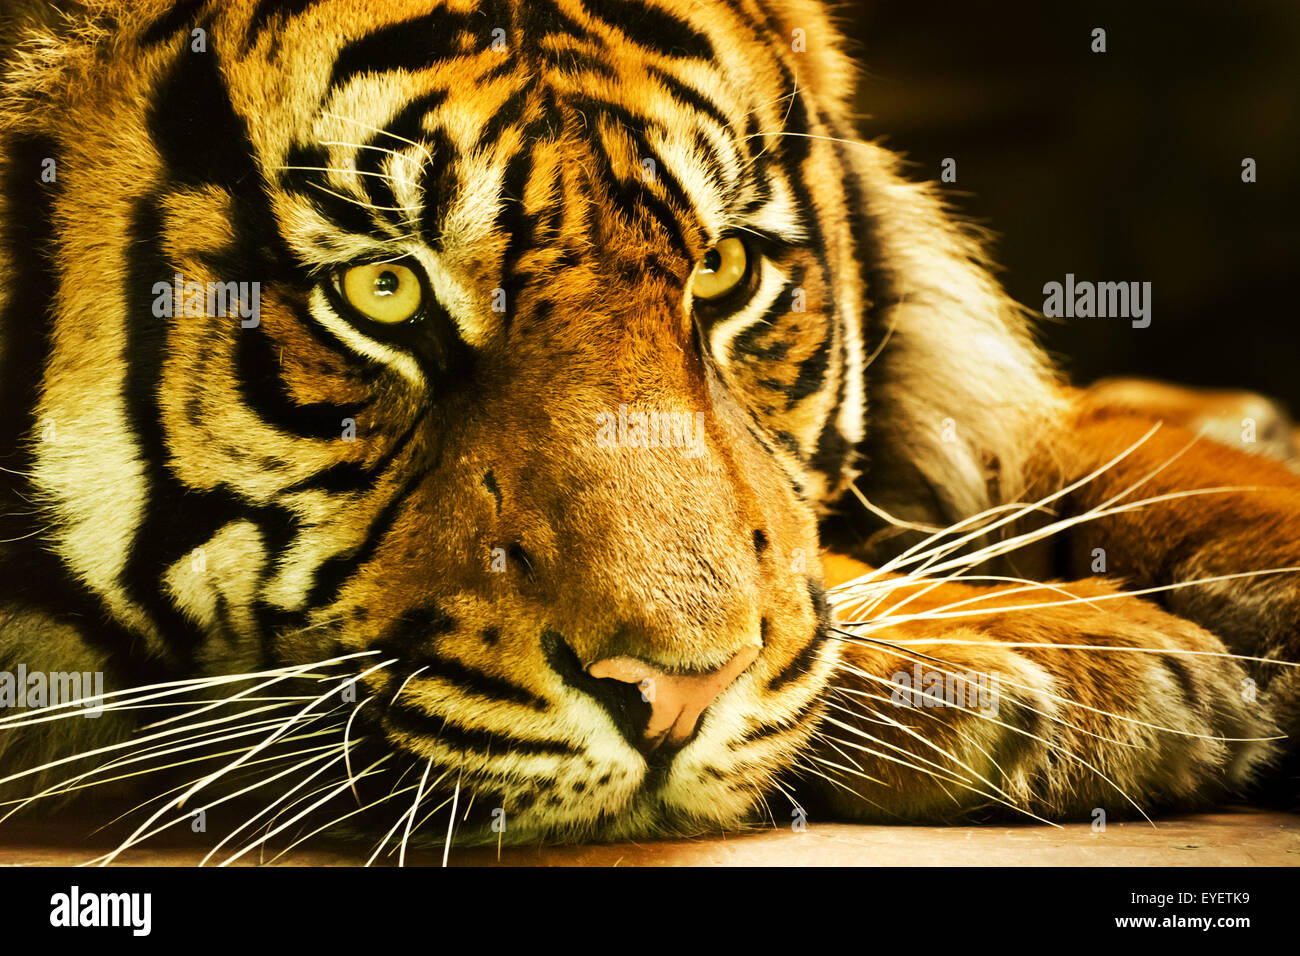 Sumatran tiger portrait Stock Photo